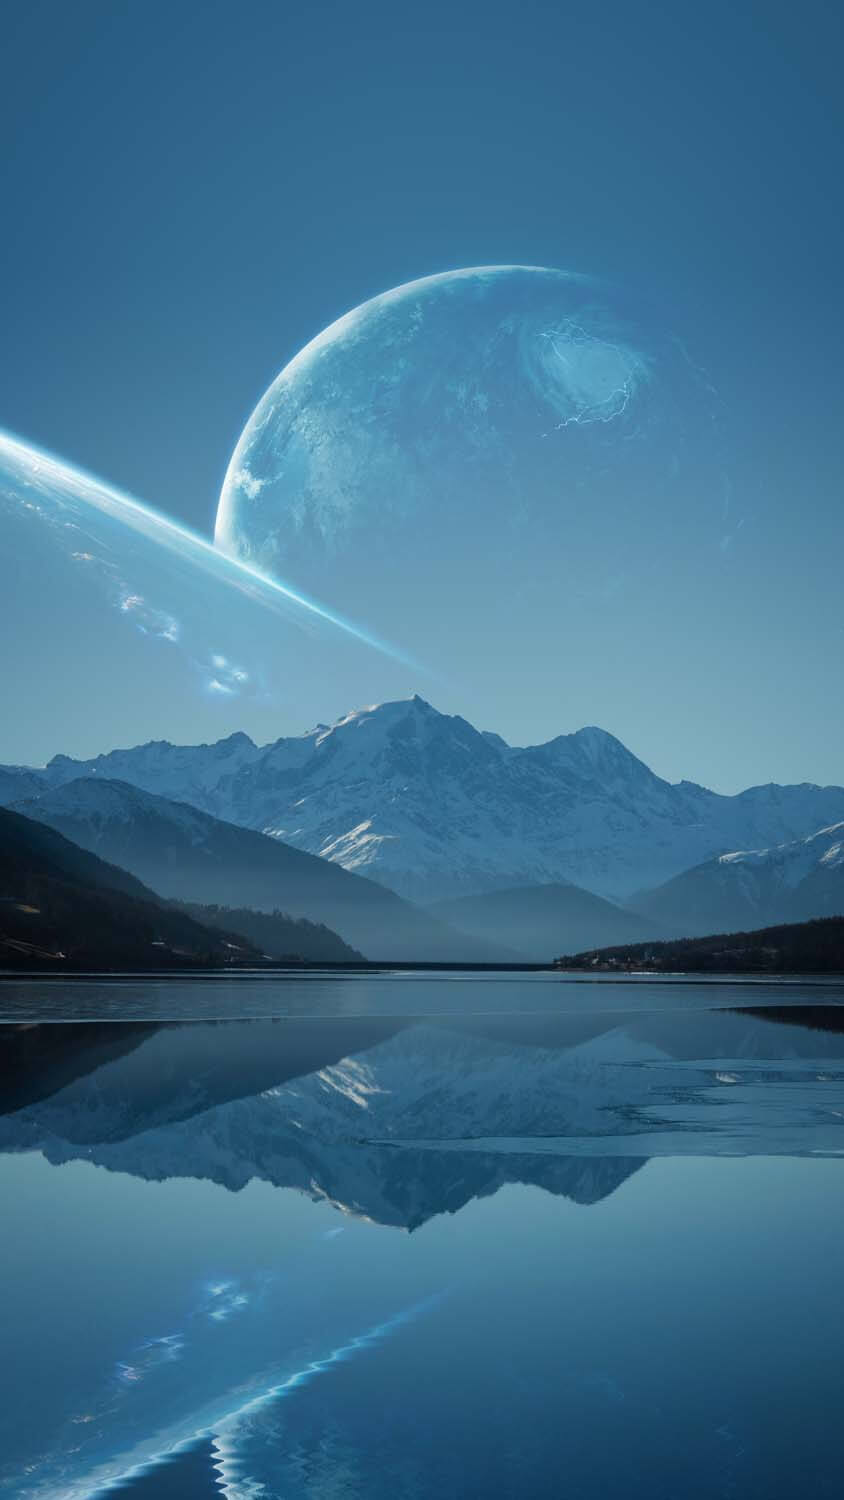 Lake in Space iPhone Wallpaper HD